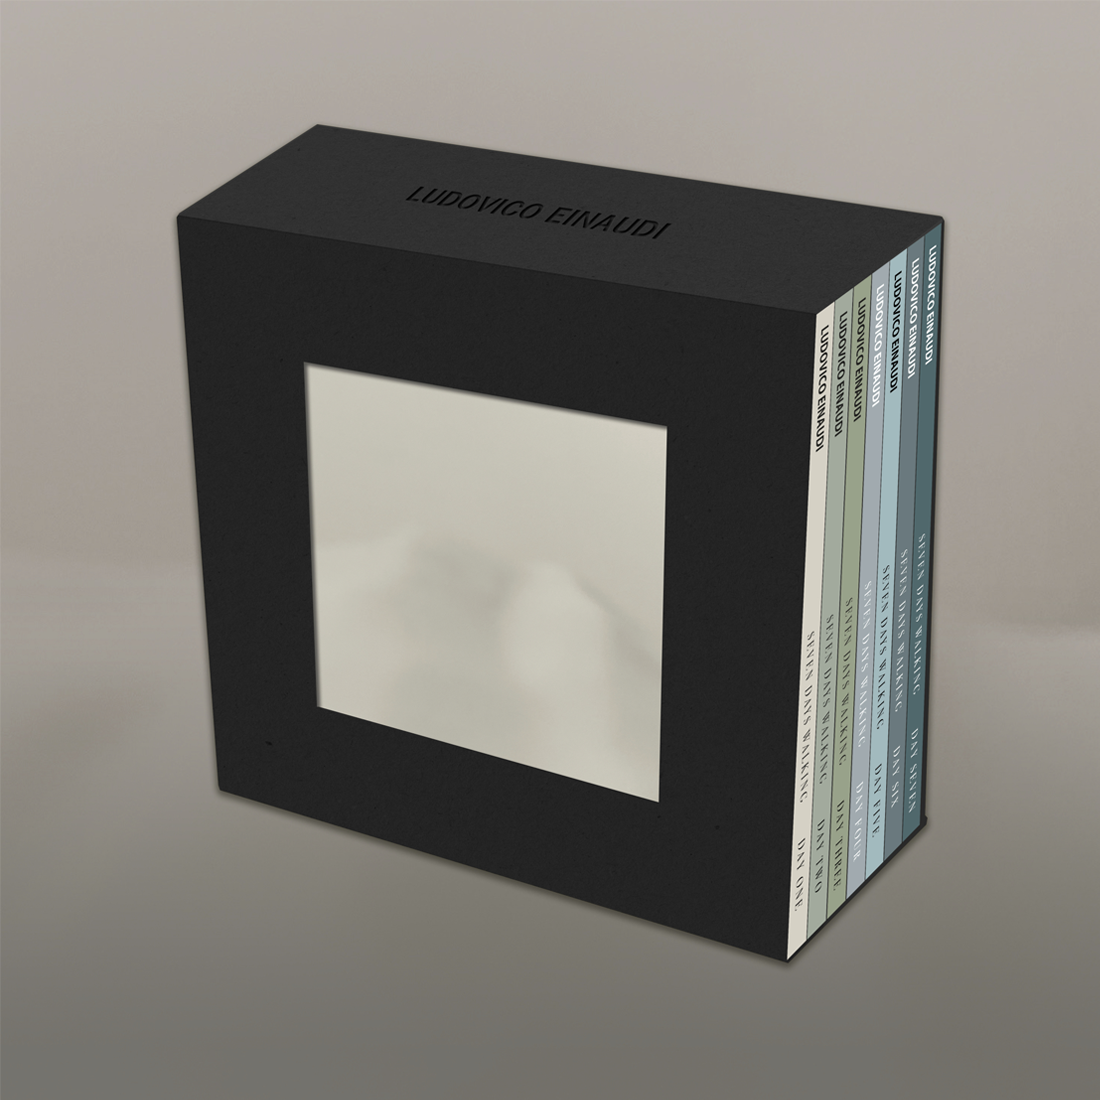 Ludovico Einaudi - Seven Days Walking: CD Box Set